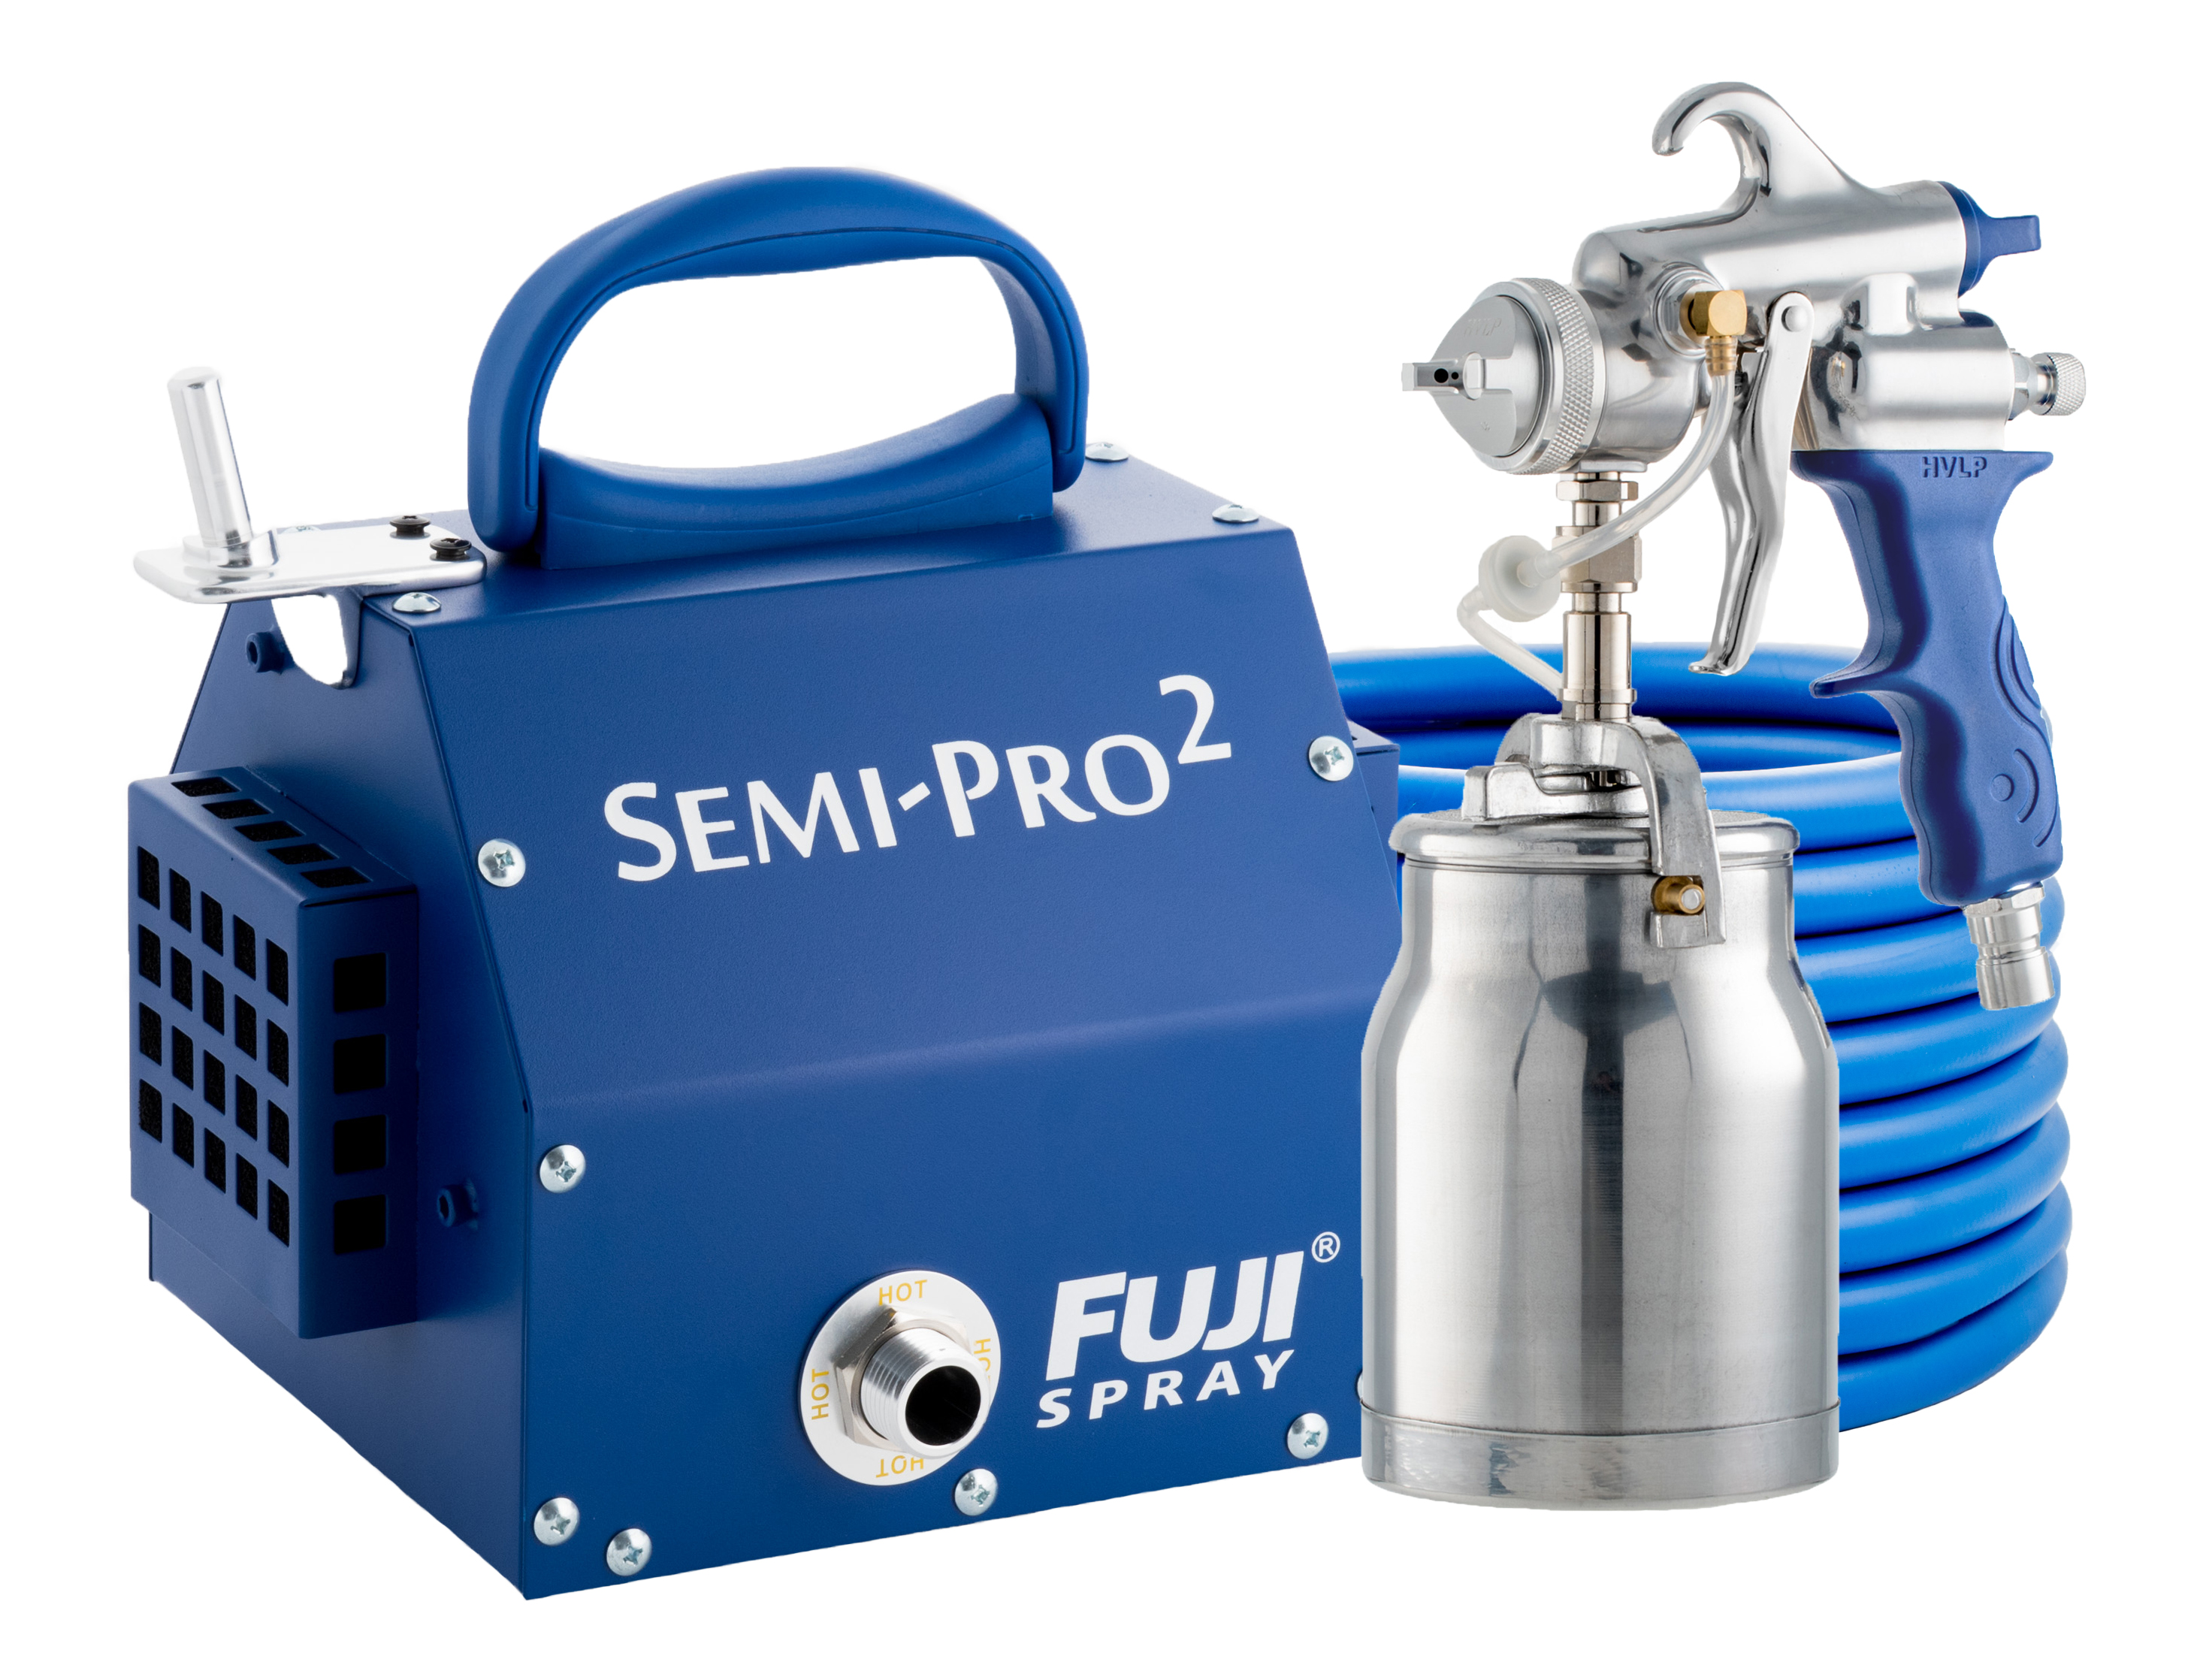 Fuji Spray Semi-PRO 2 HVLP Spray System, 2202 - image 1 of 3